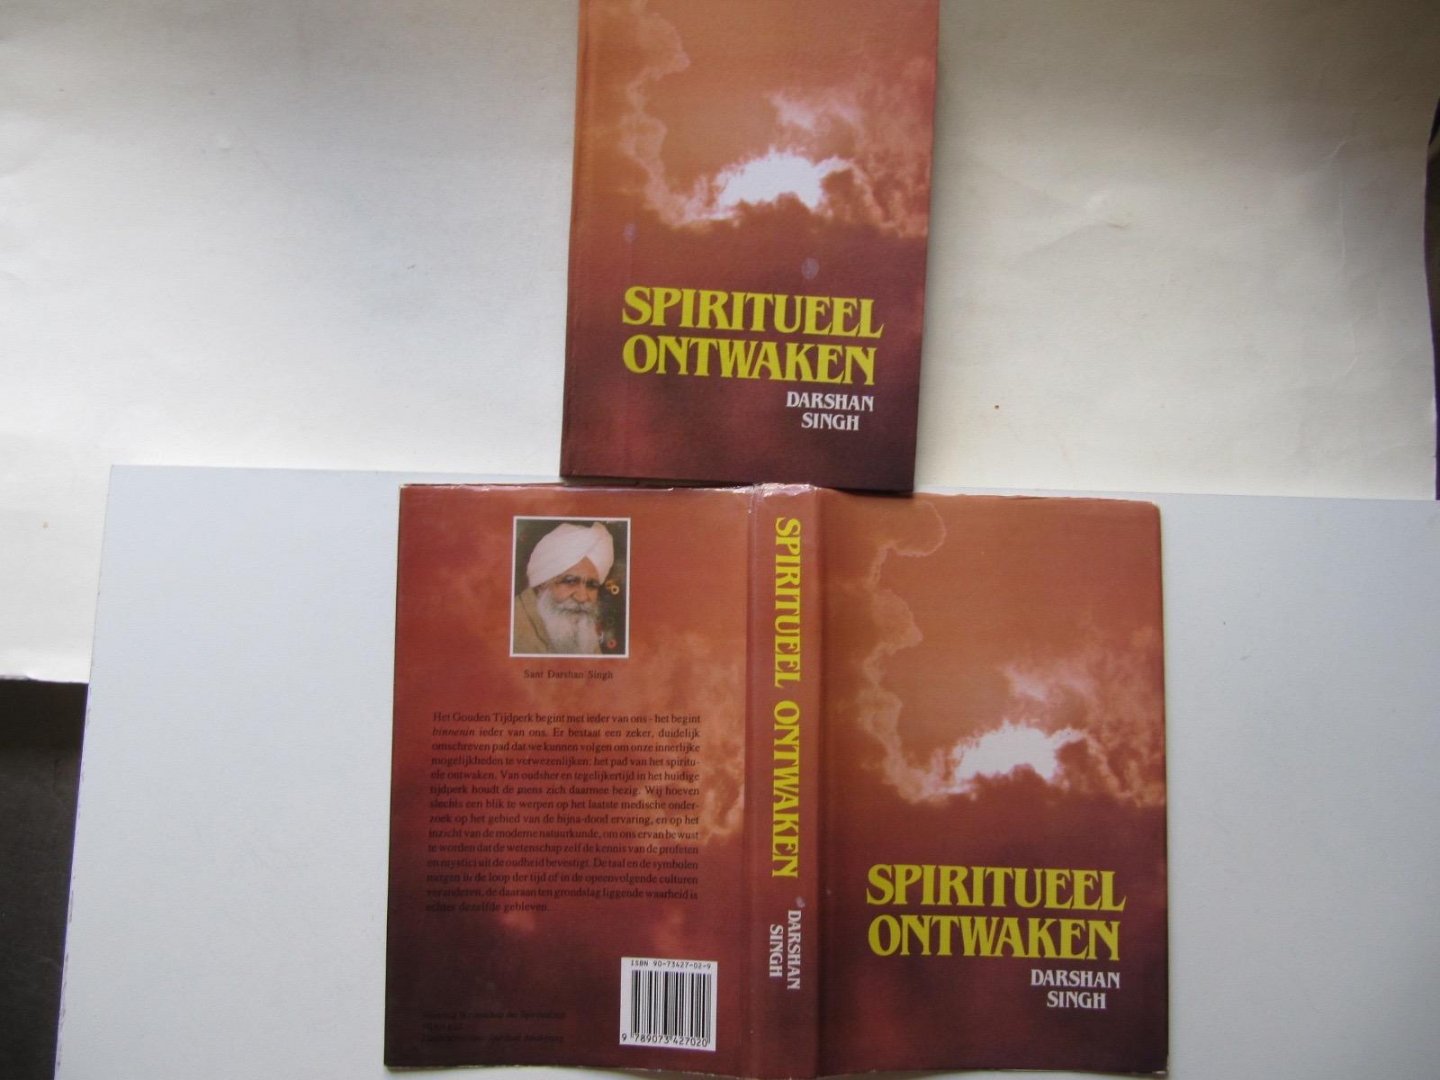 Darshan Singh - Spiritueel ontwaken